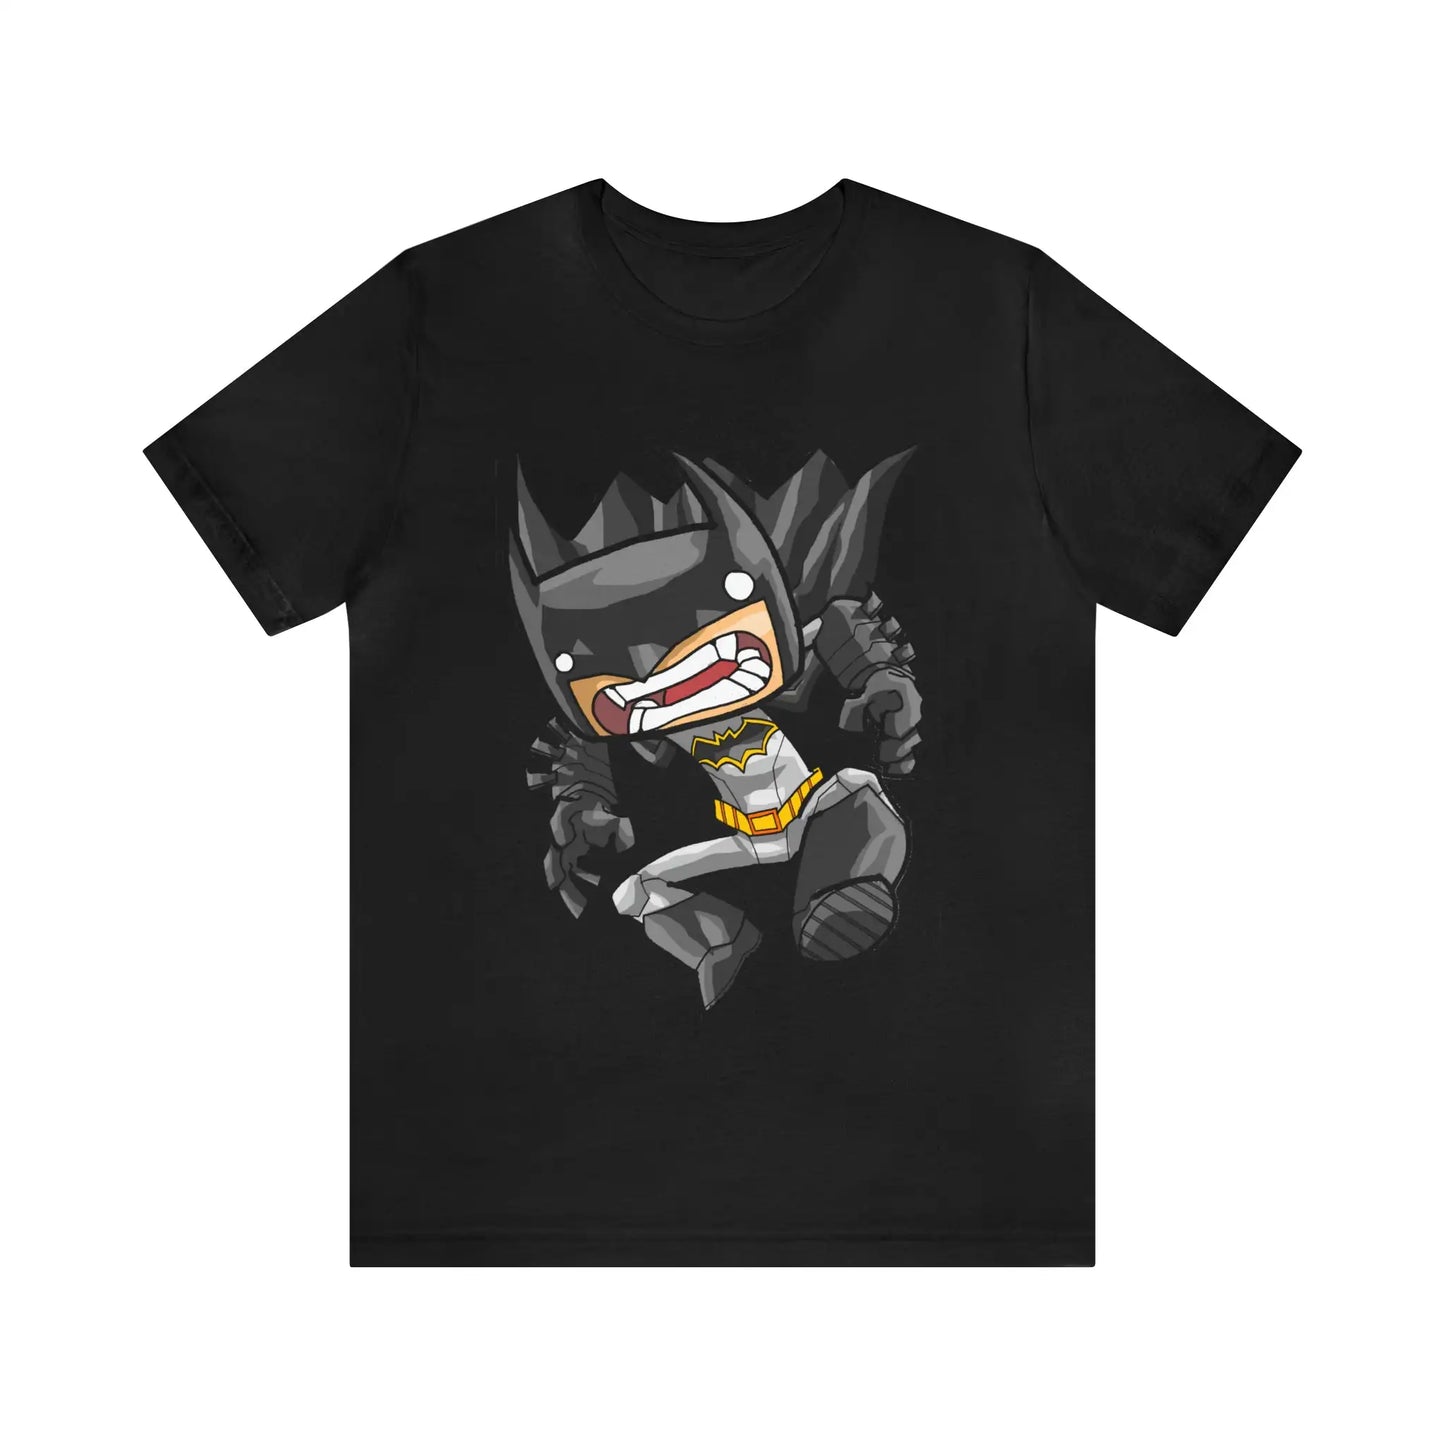 Batman T-Shirt Cartoon Chibi Style Gift Tee Unisex For Men and Women